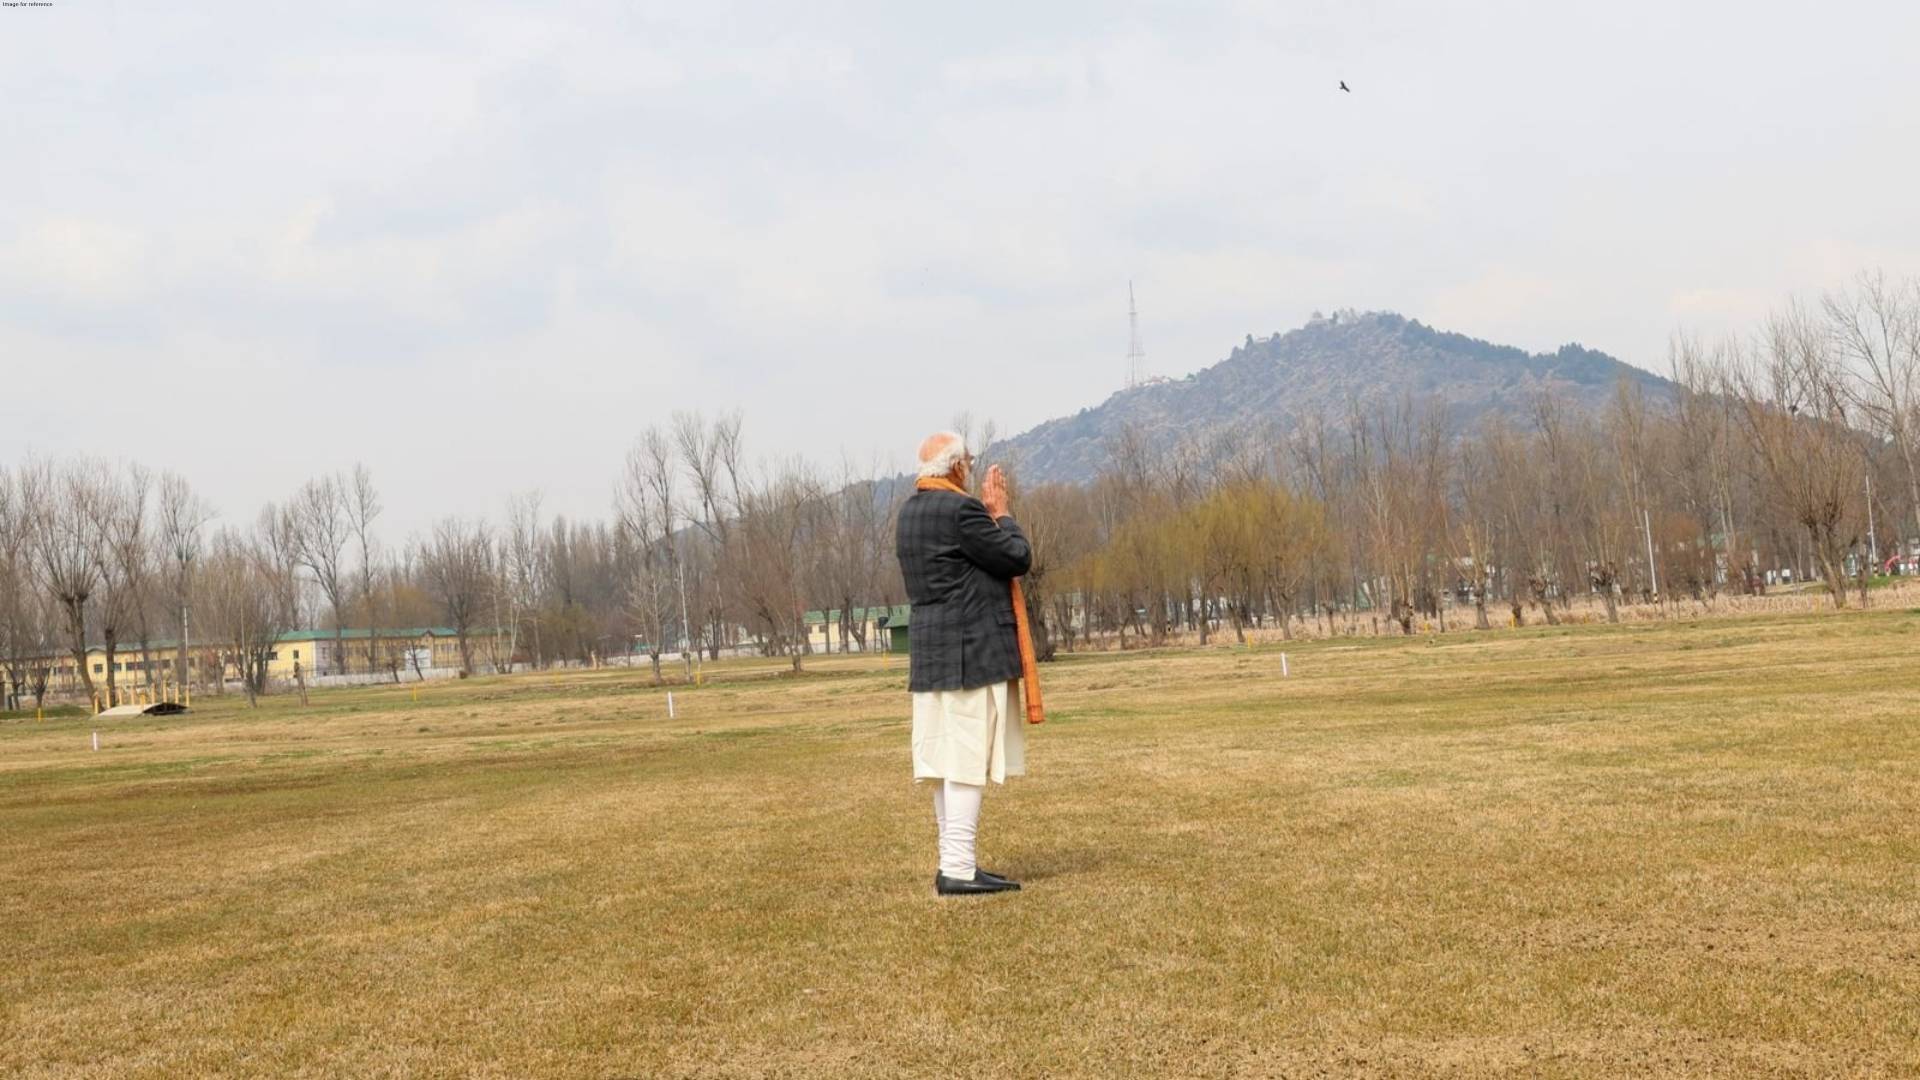 PM Modi's spiritual pause; halts to see 'majestic' Shankaracharya Hill en route to Srinagar